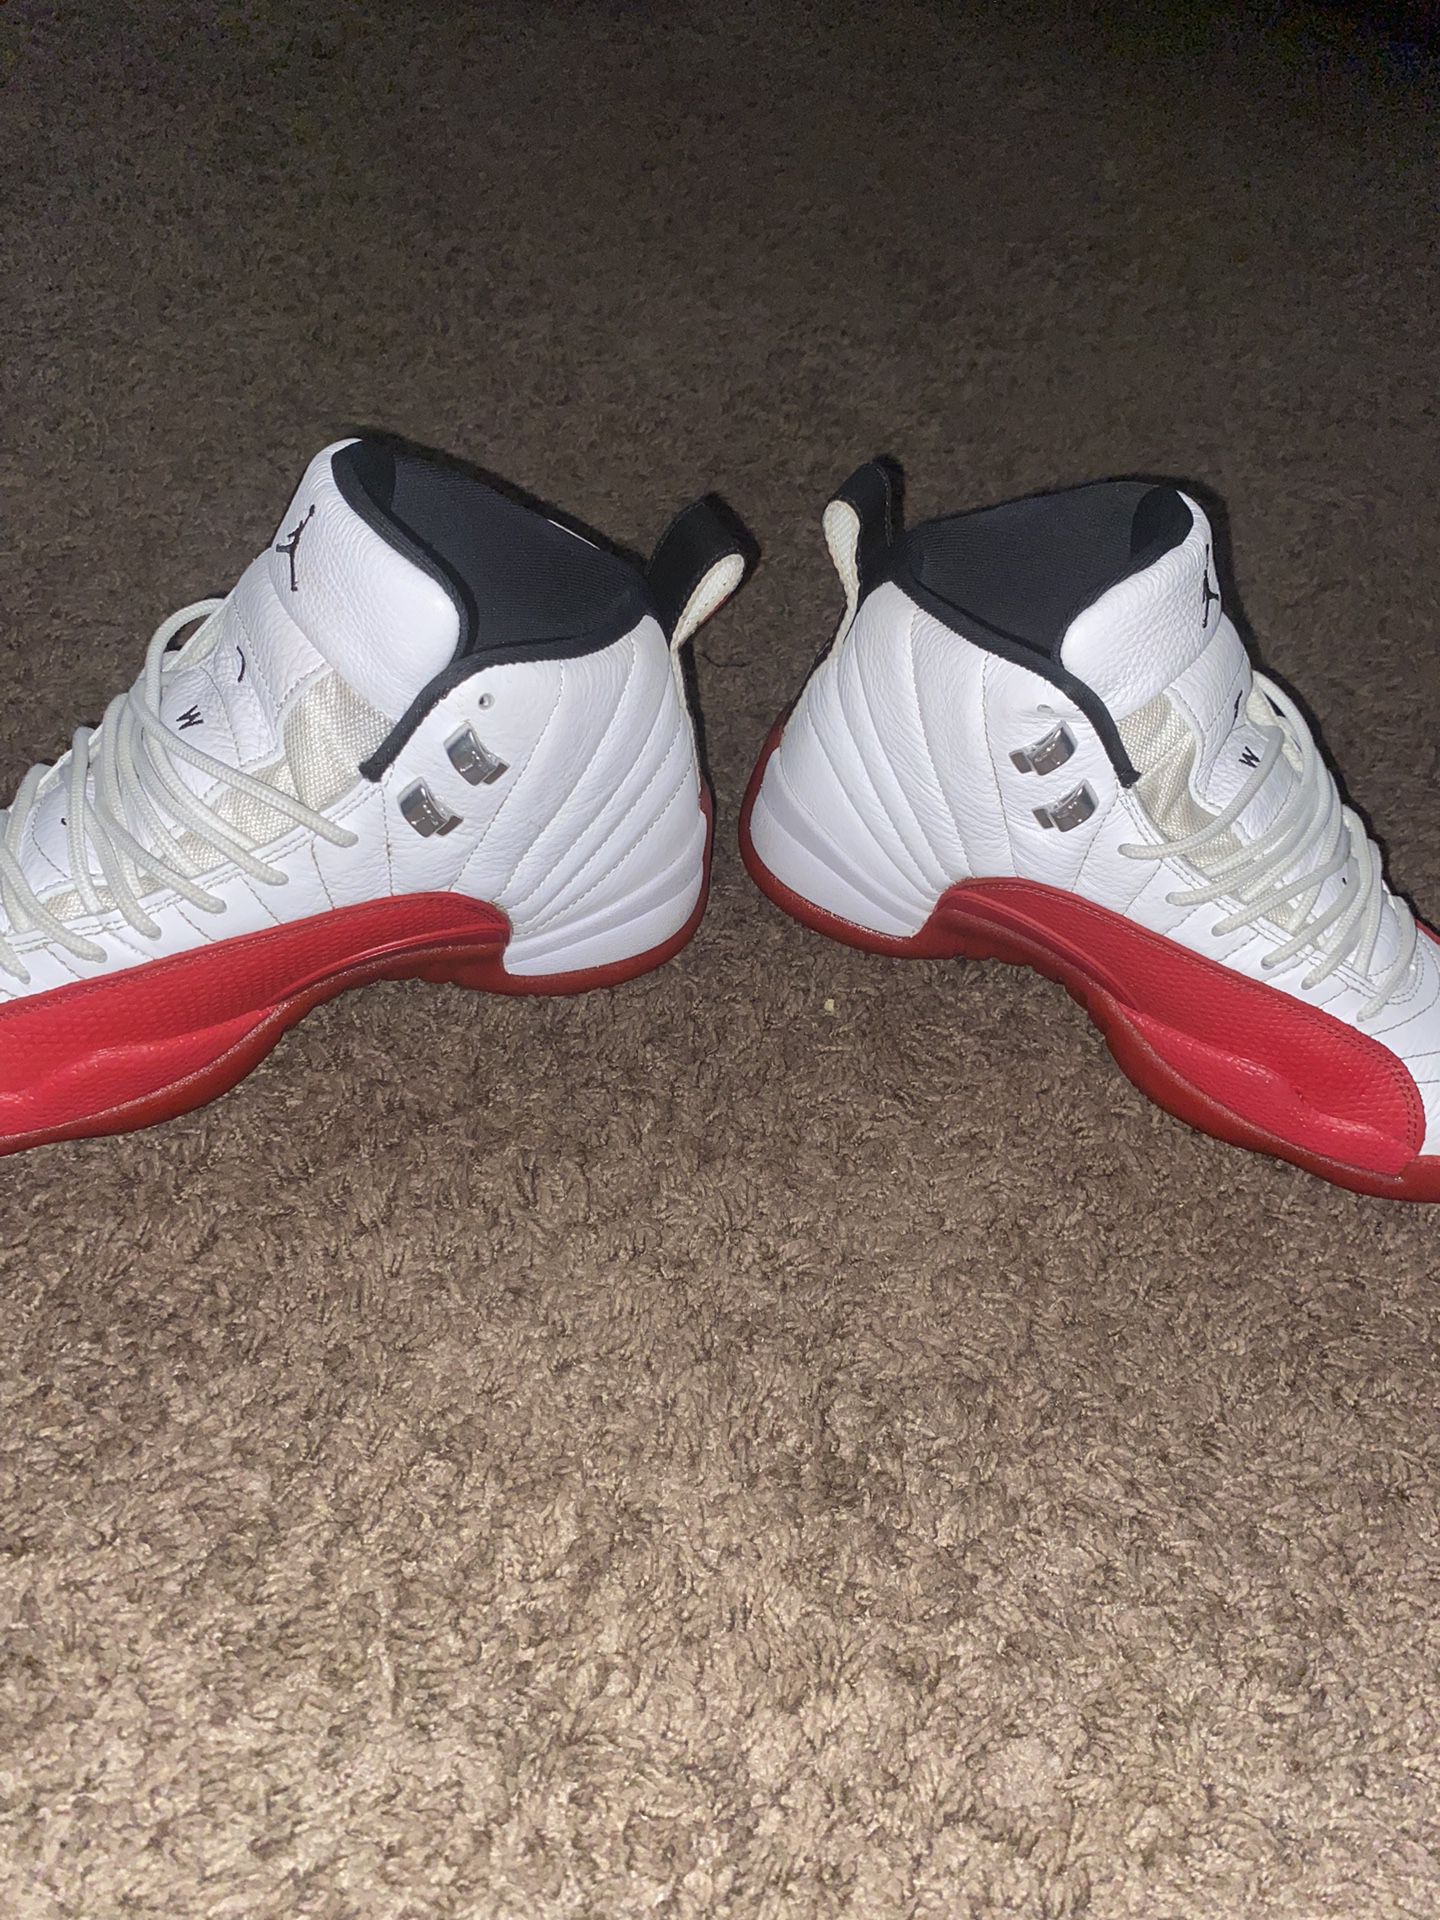 Cherry Jordan 12s Size 8.5